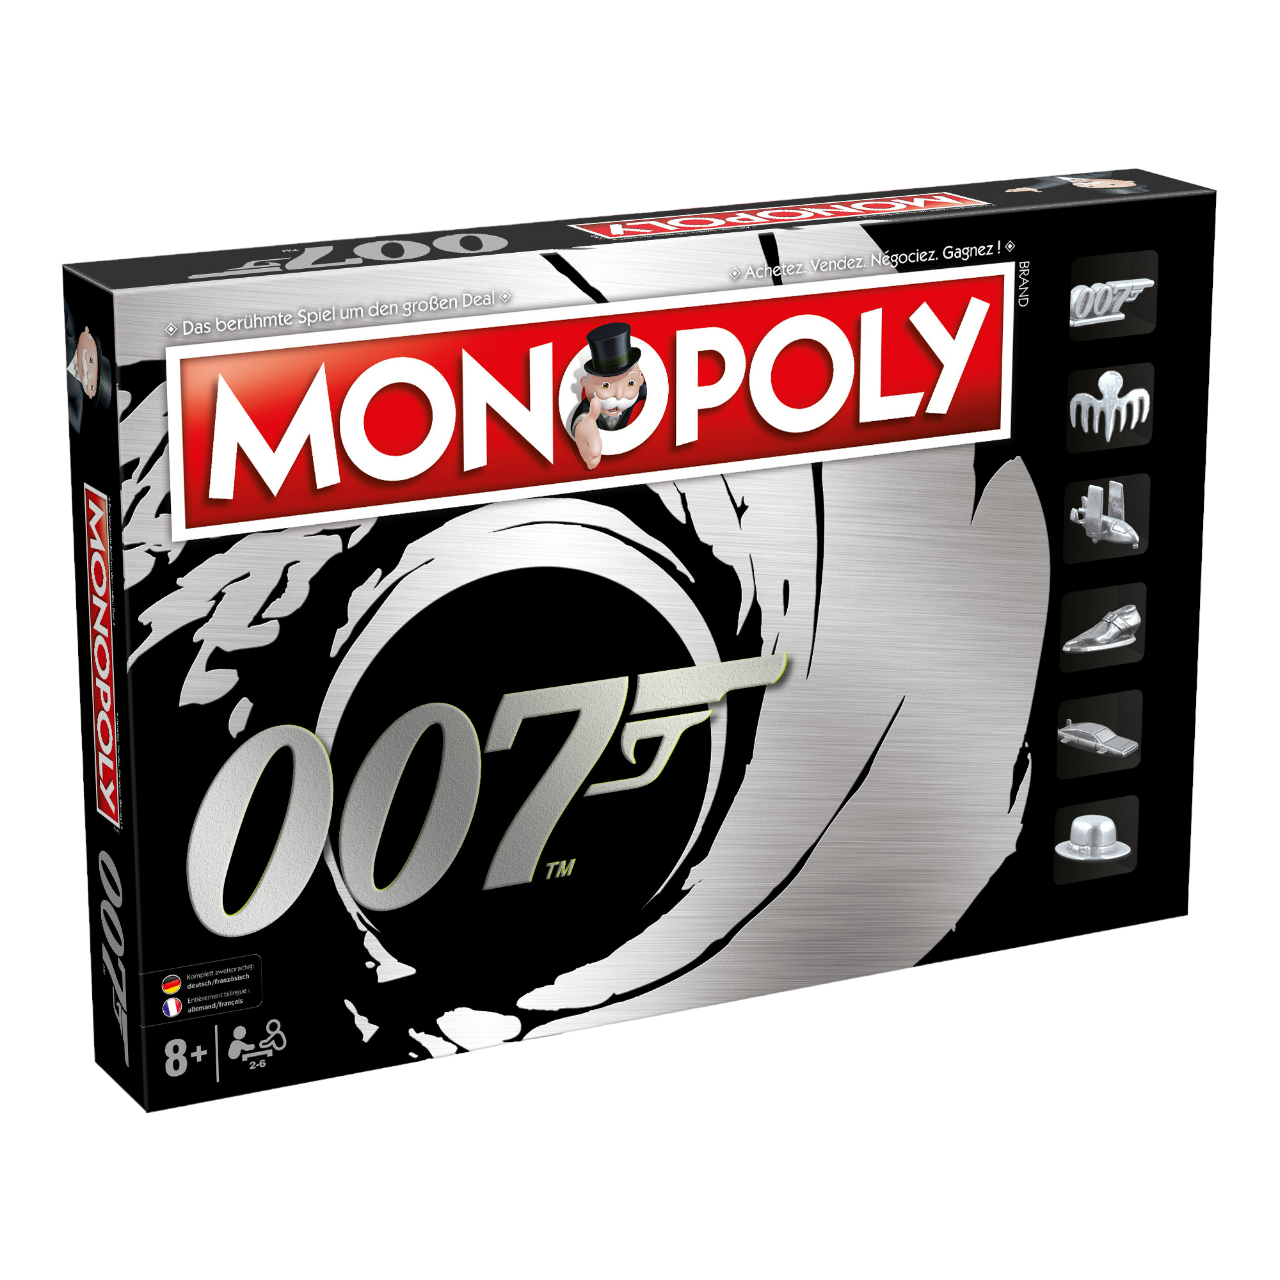 James Monopoly Bond